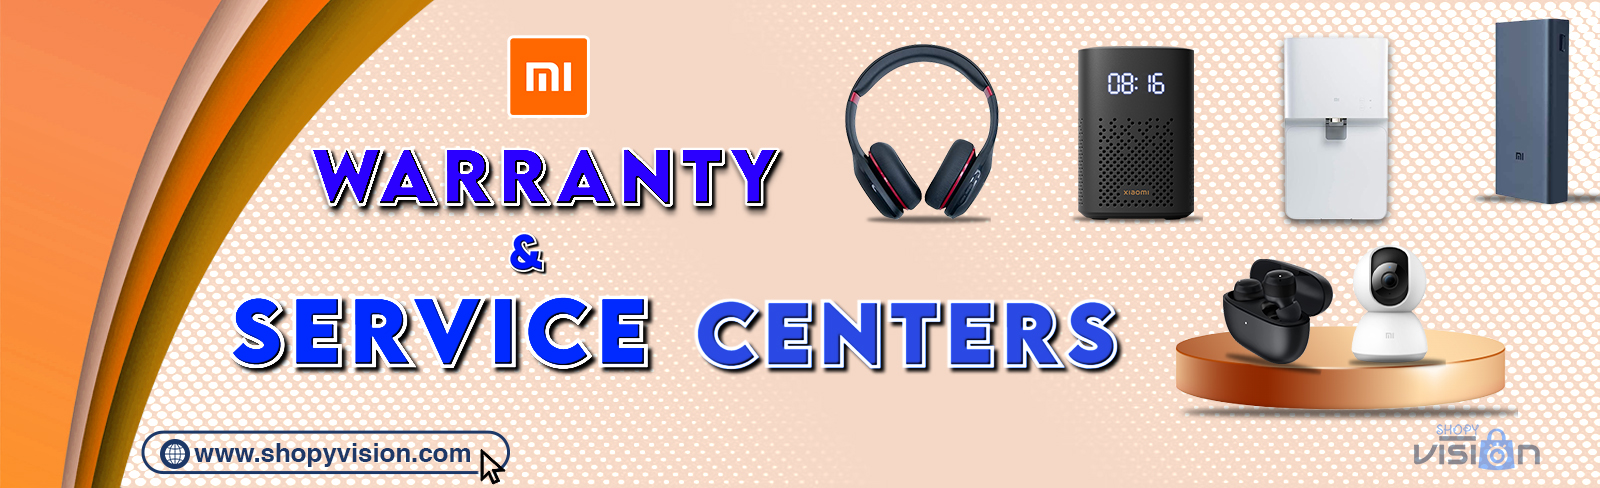 Mi Warranty & Service Center in India